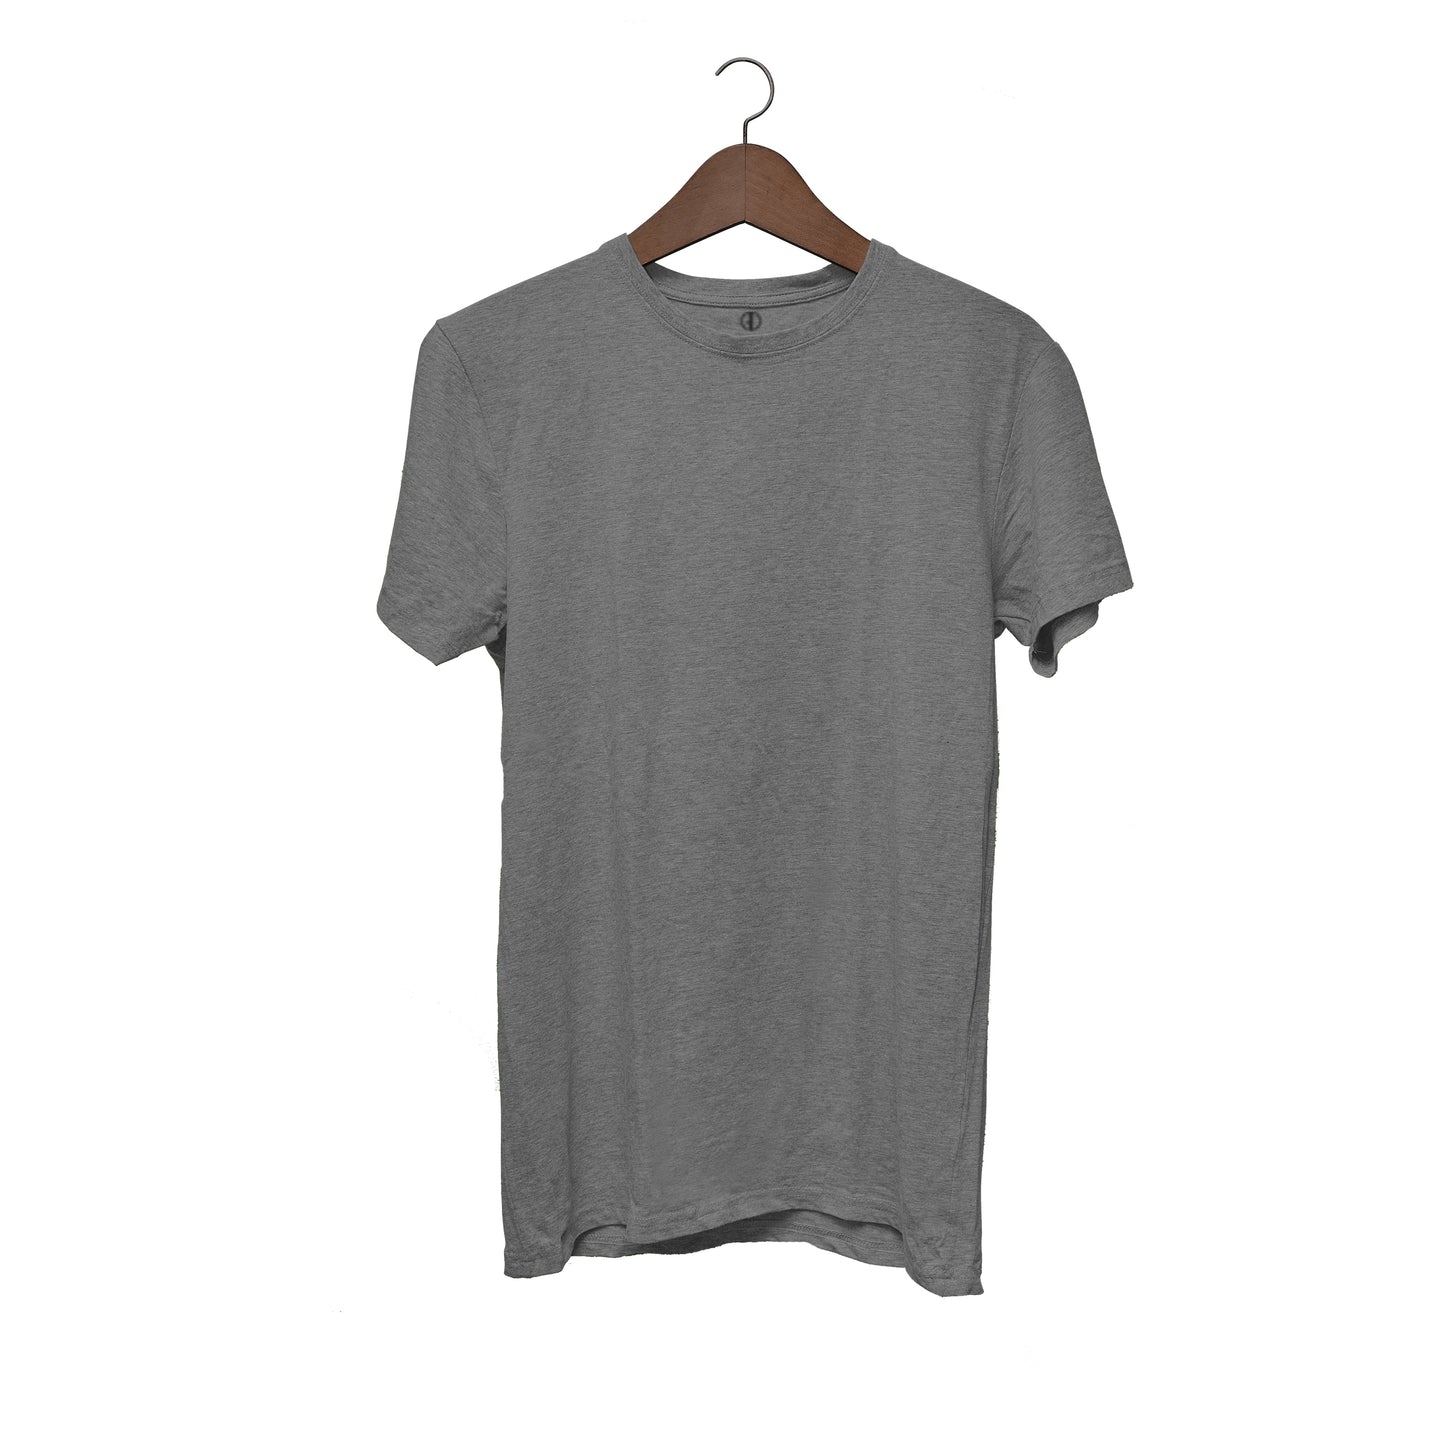 Charcoal Melange - Plain T-shirt Men